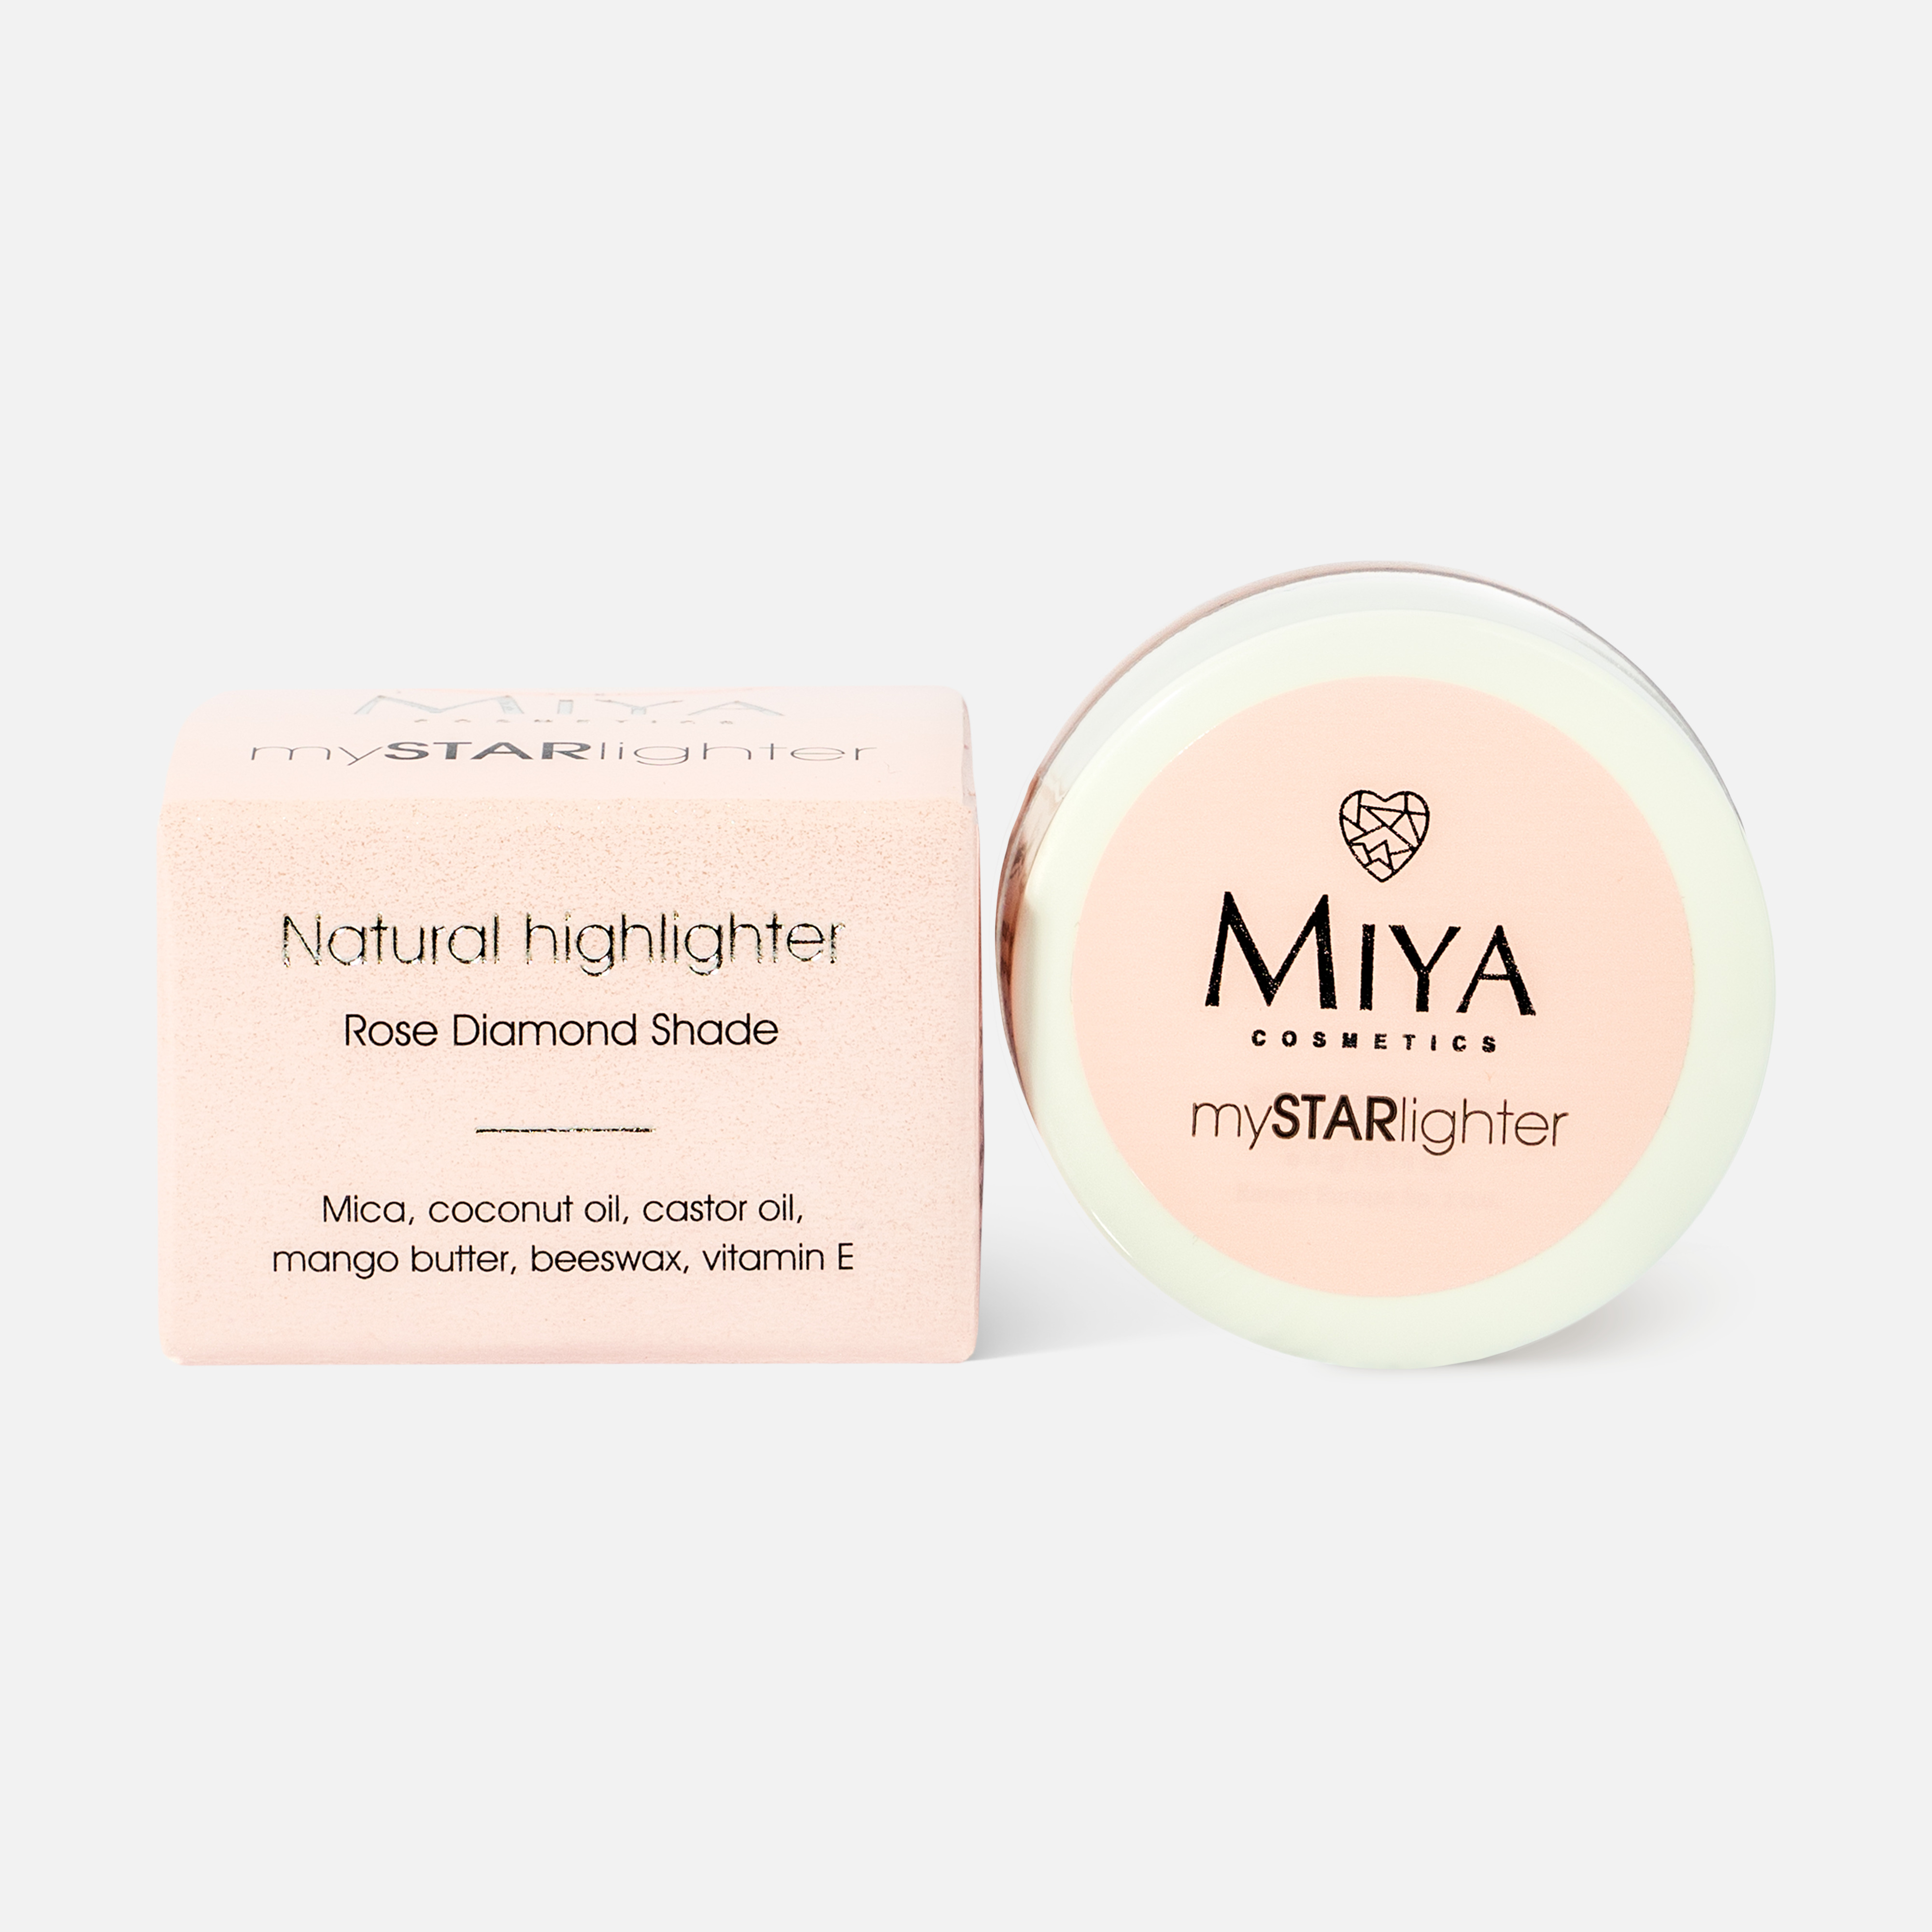 Хайлайтер для лица Miya cosmetics Mystarlighter Rose Diamond, 4 г хайлайтер для лица miya cosmetics mystarlighter sunset glow 4 г